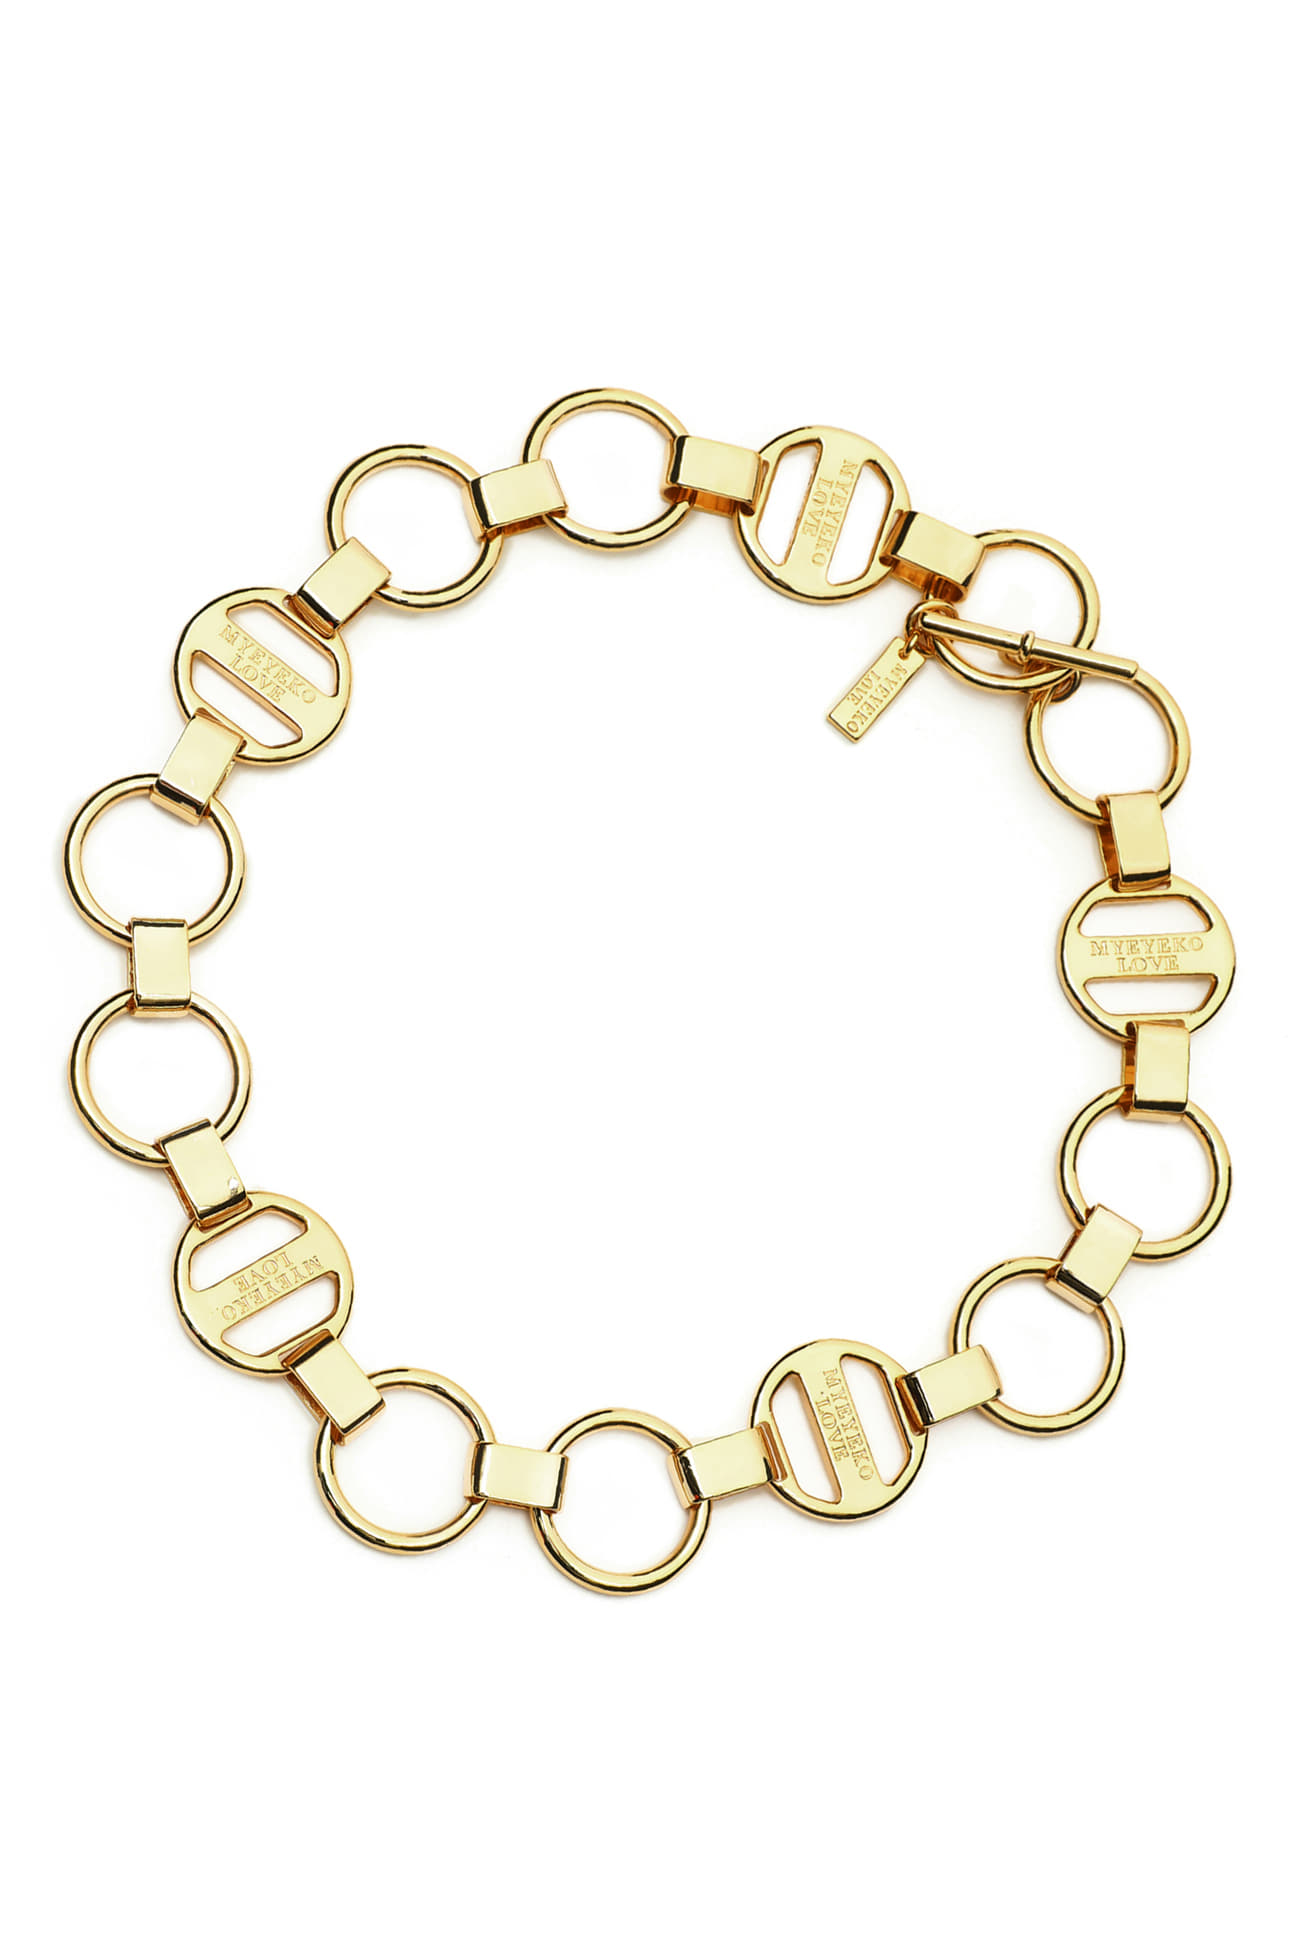 MYEYEKO Logo Love Chain Necklace Gold